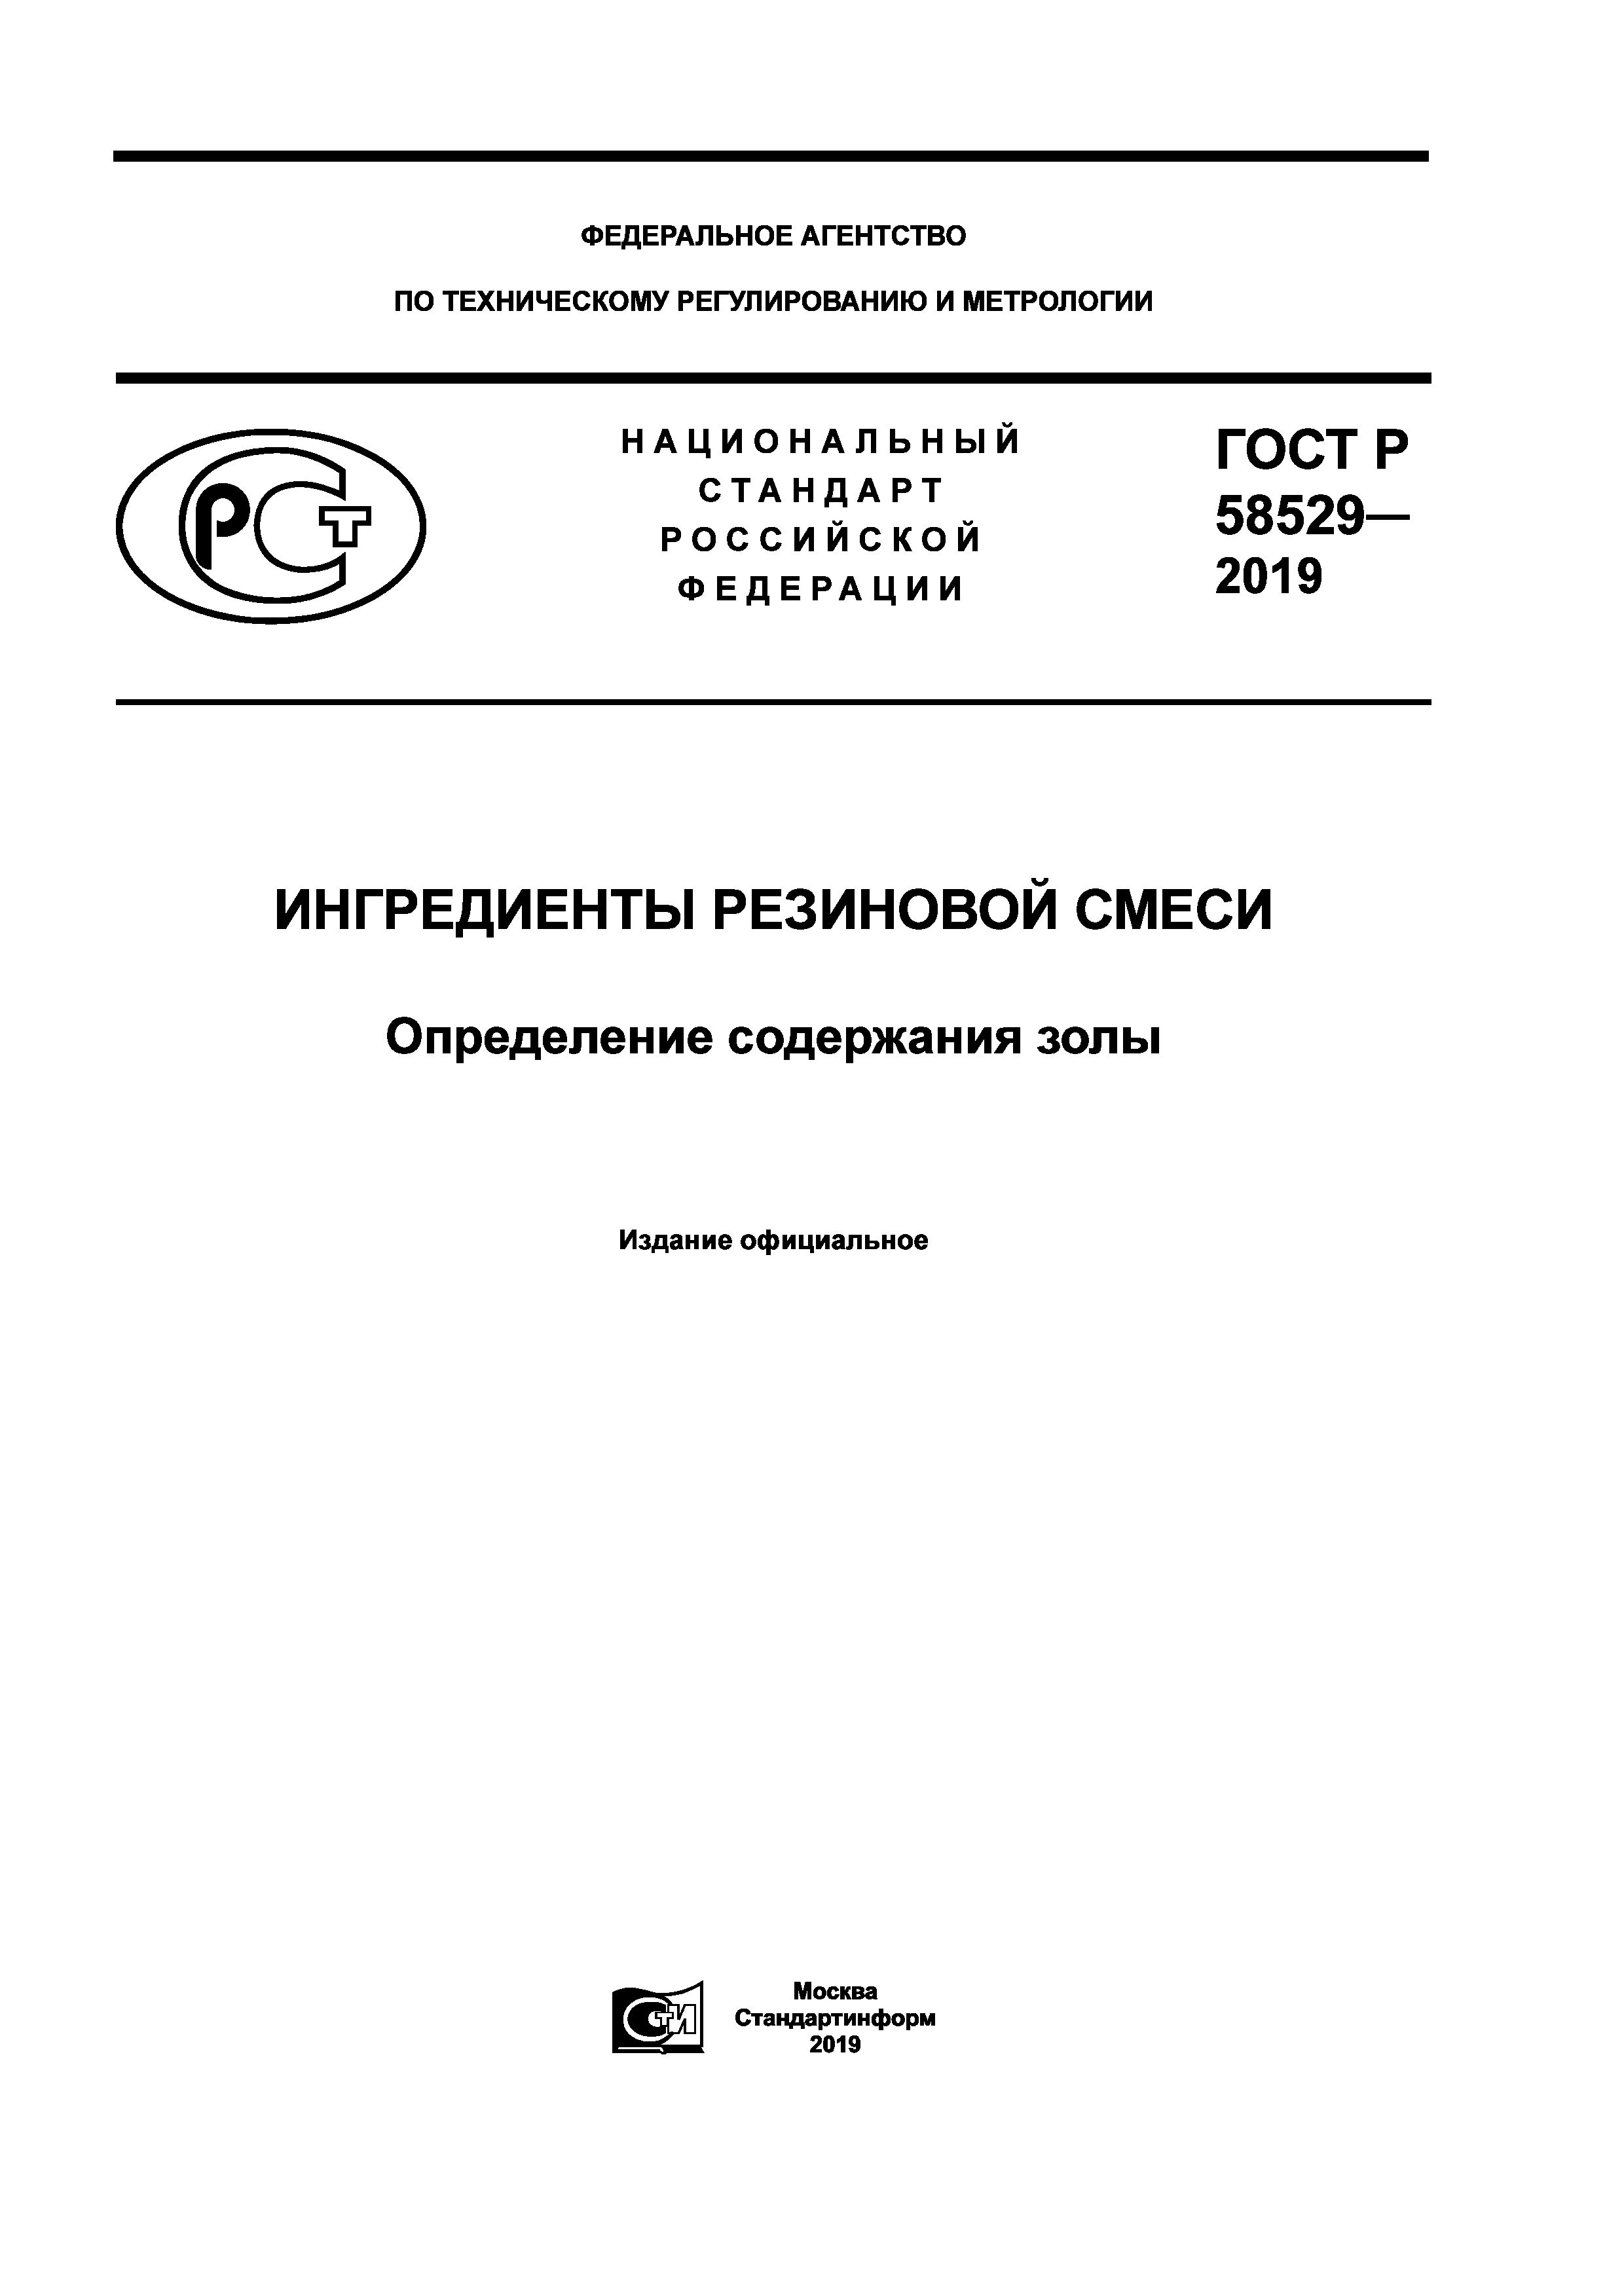 ГОСТ Р 58529-2019